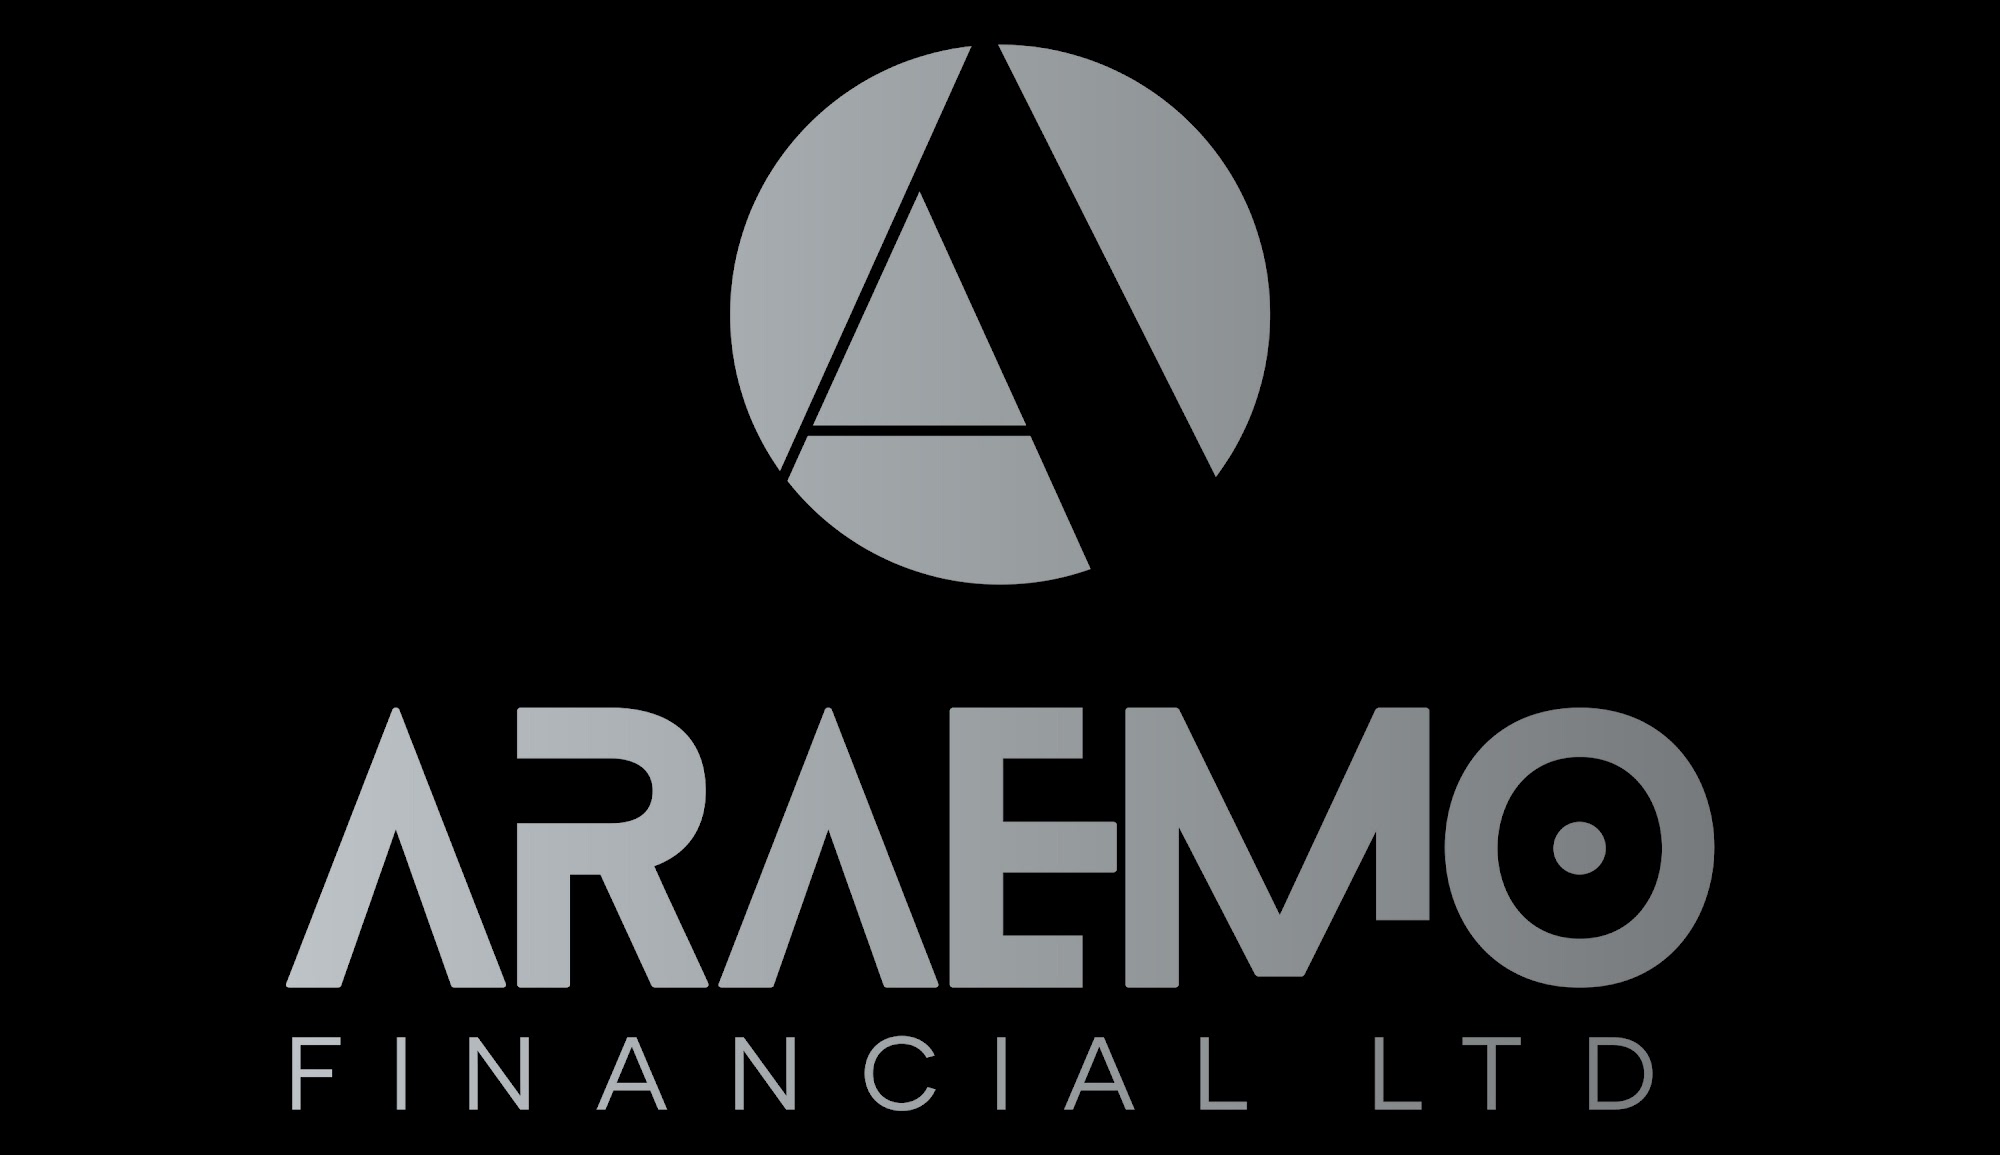 Araemo Financial Ltd